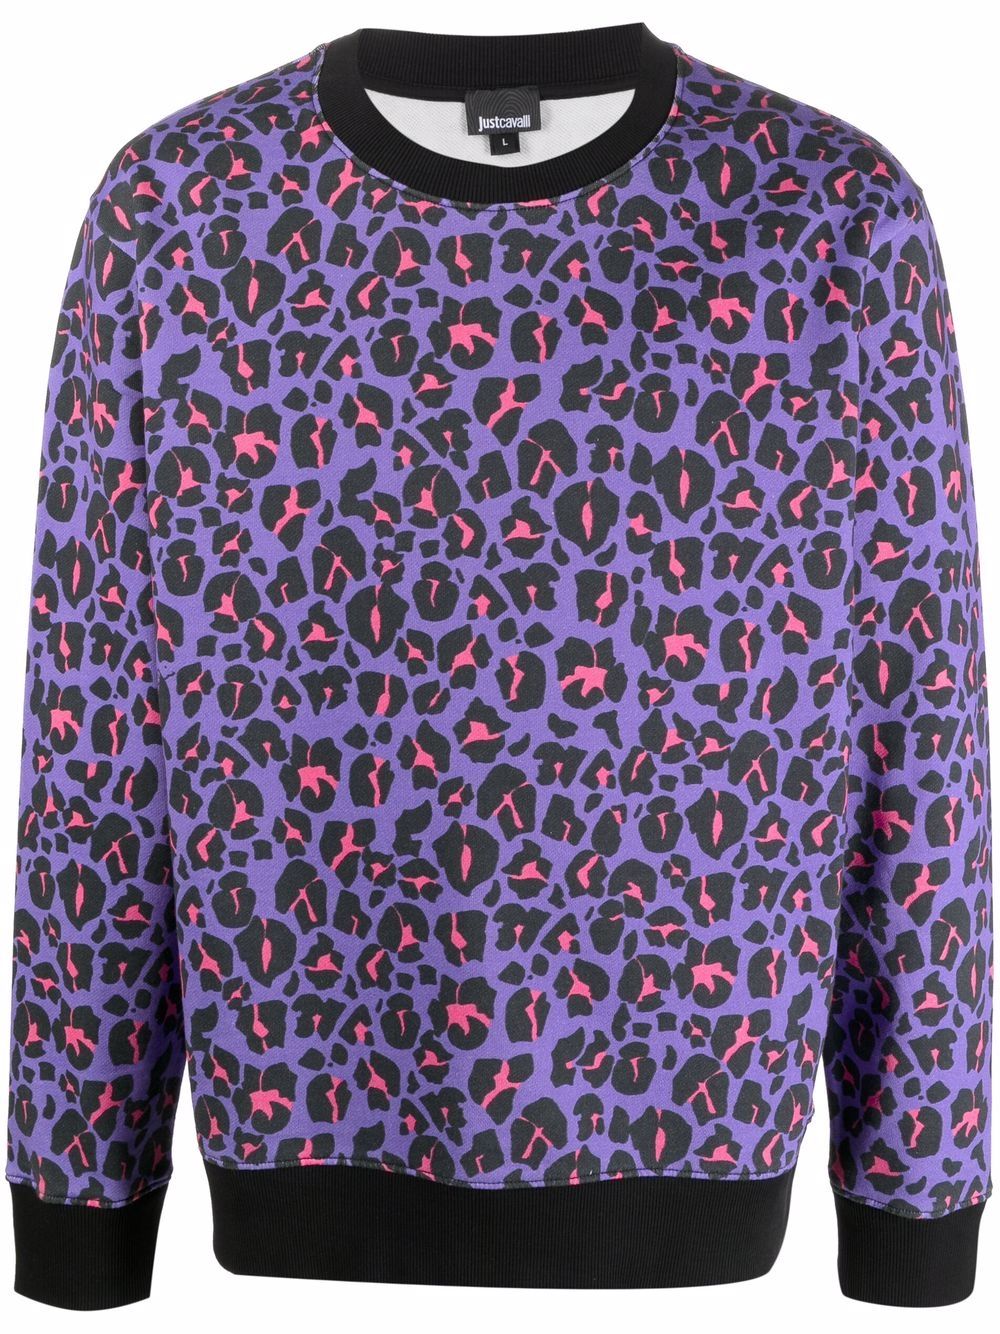 abstract leopard print sweatshirt